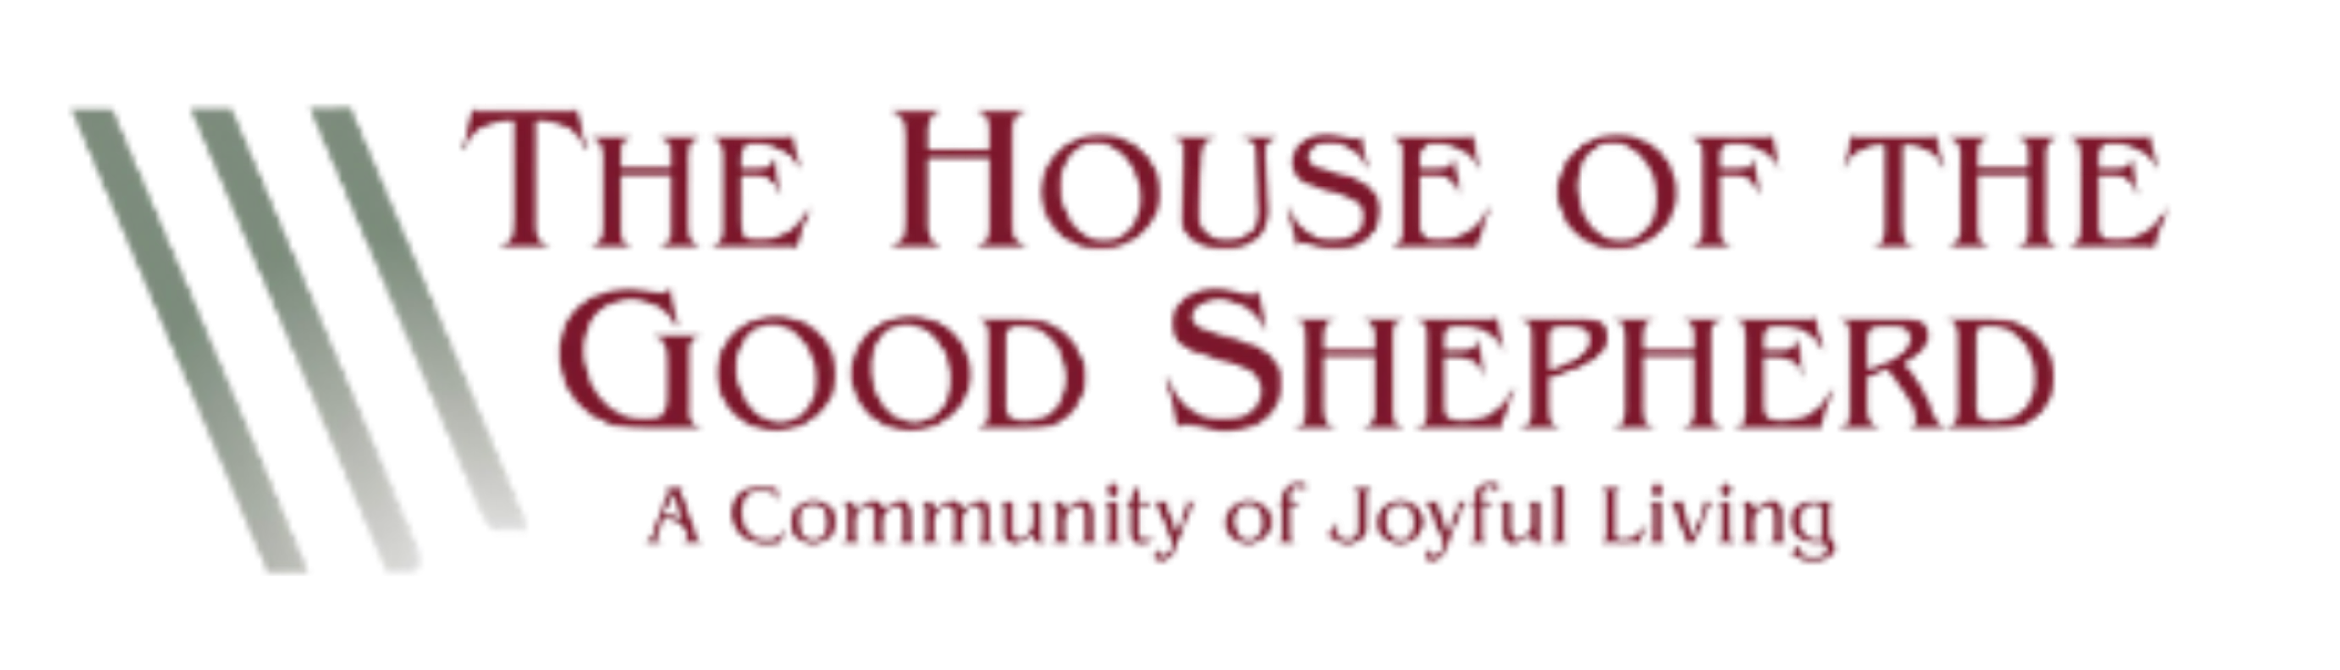 House of the Good Shepherd logo